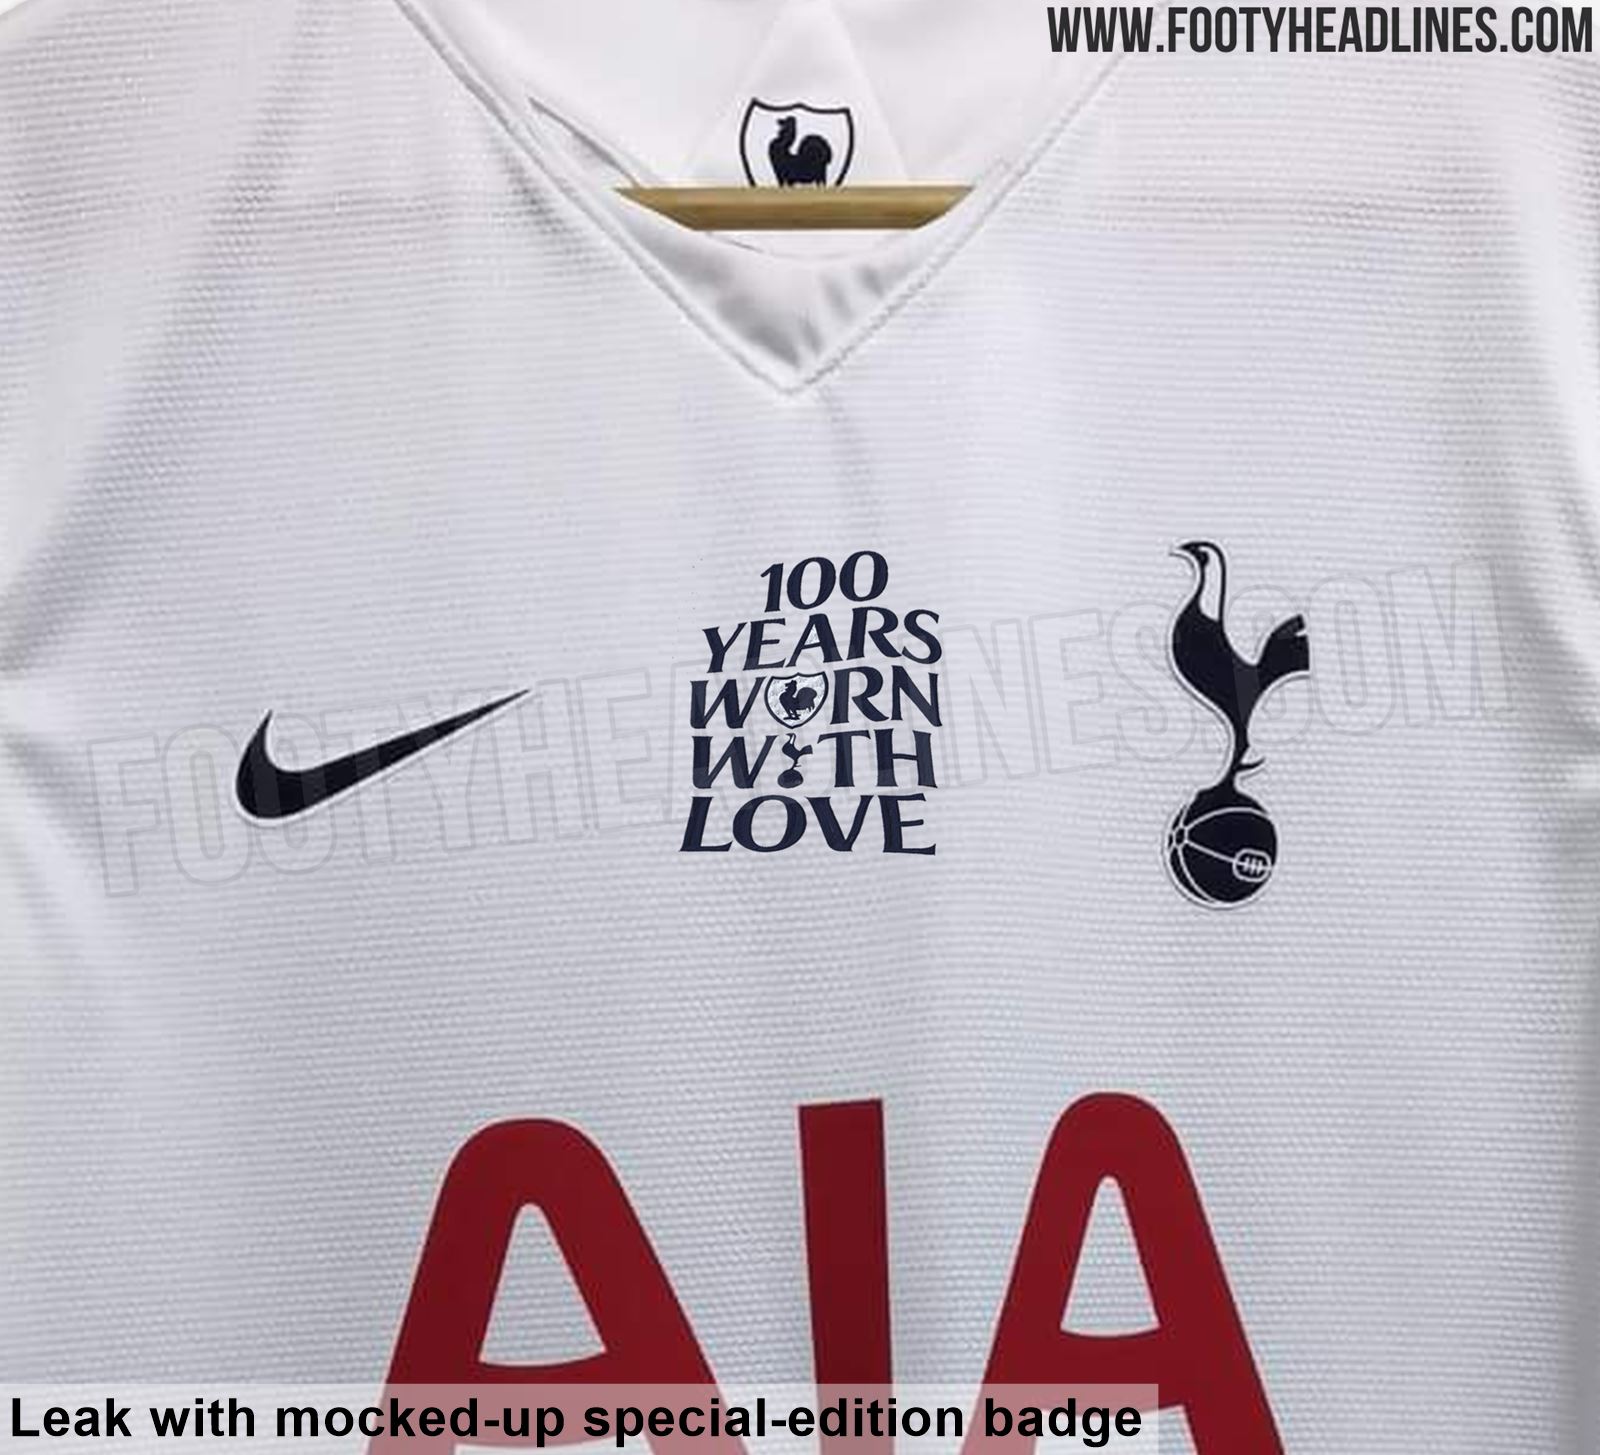 Tottenham Hotspur 20-21 Home & Away Kits Released - Footy Headlines